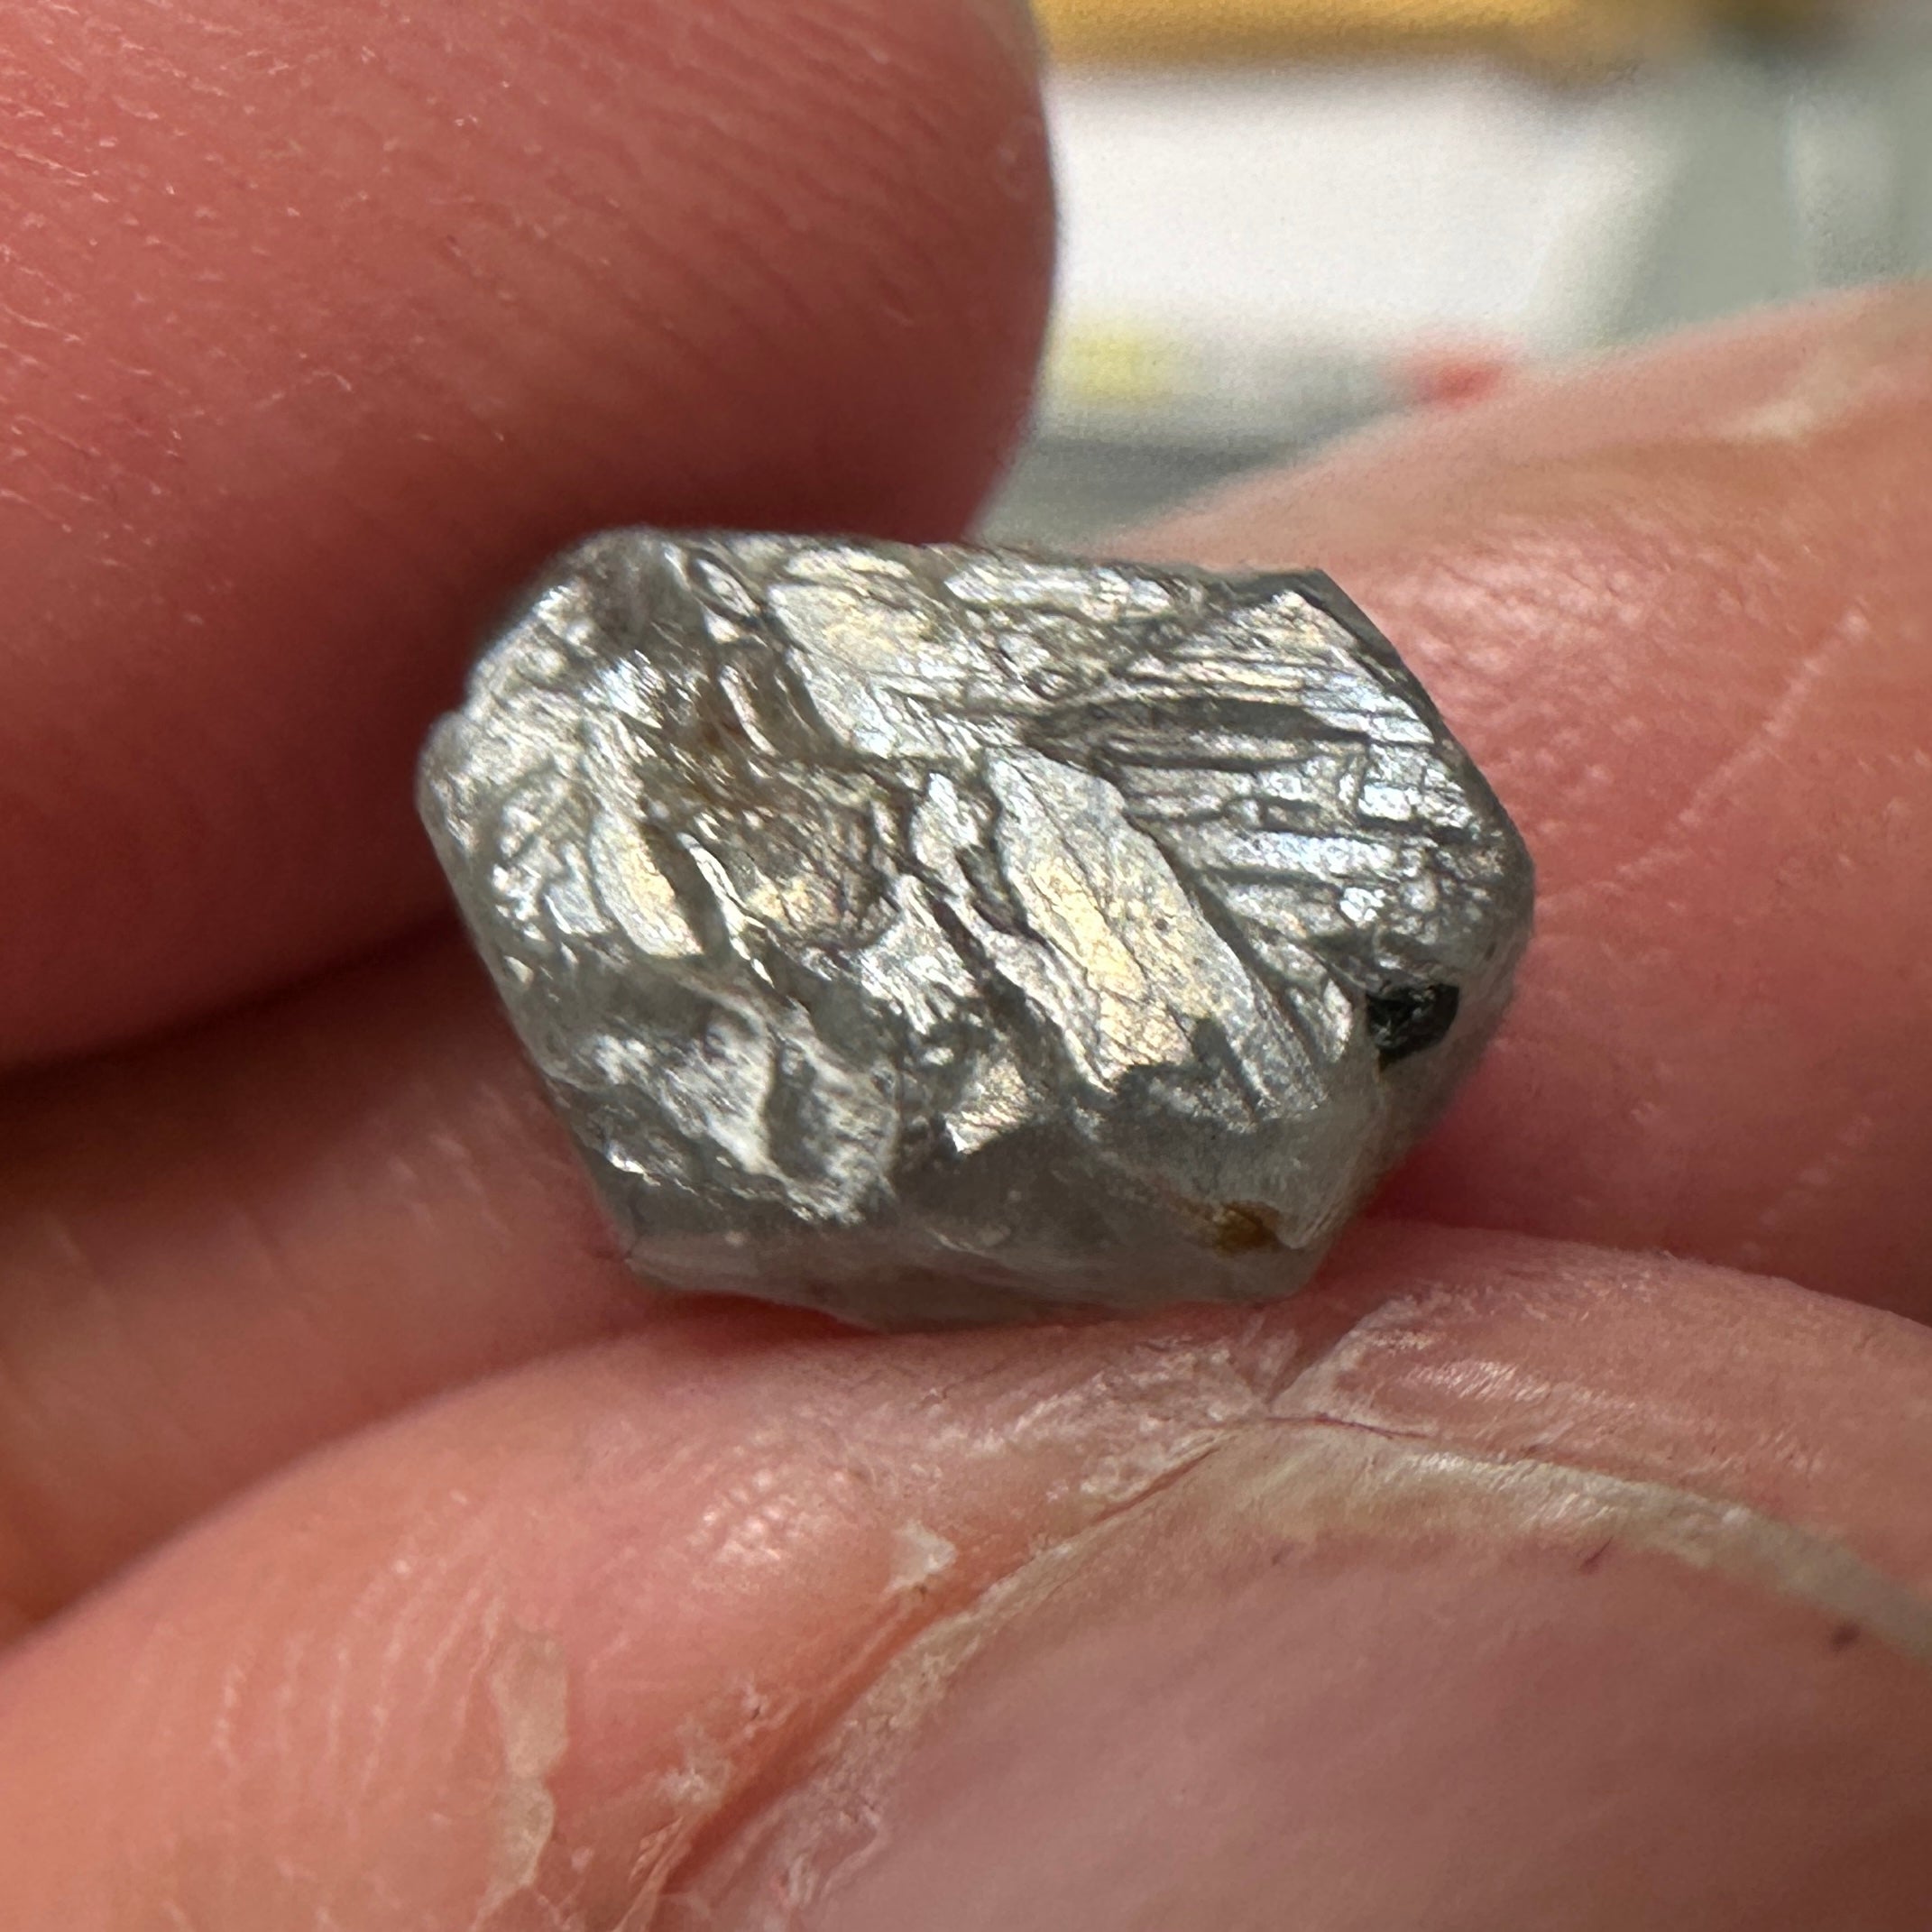 4.25ct Alexandrite Crystal, Tanzania, Untreated Unheated.